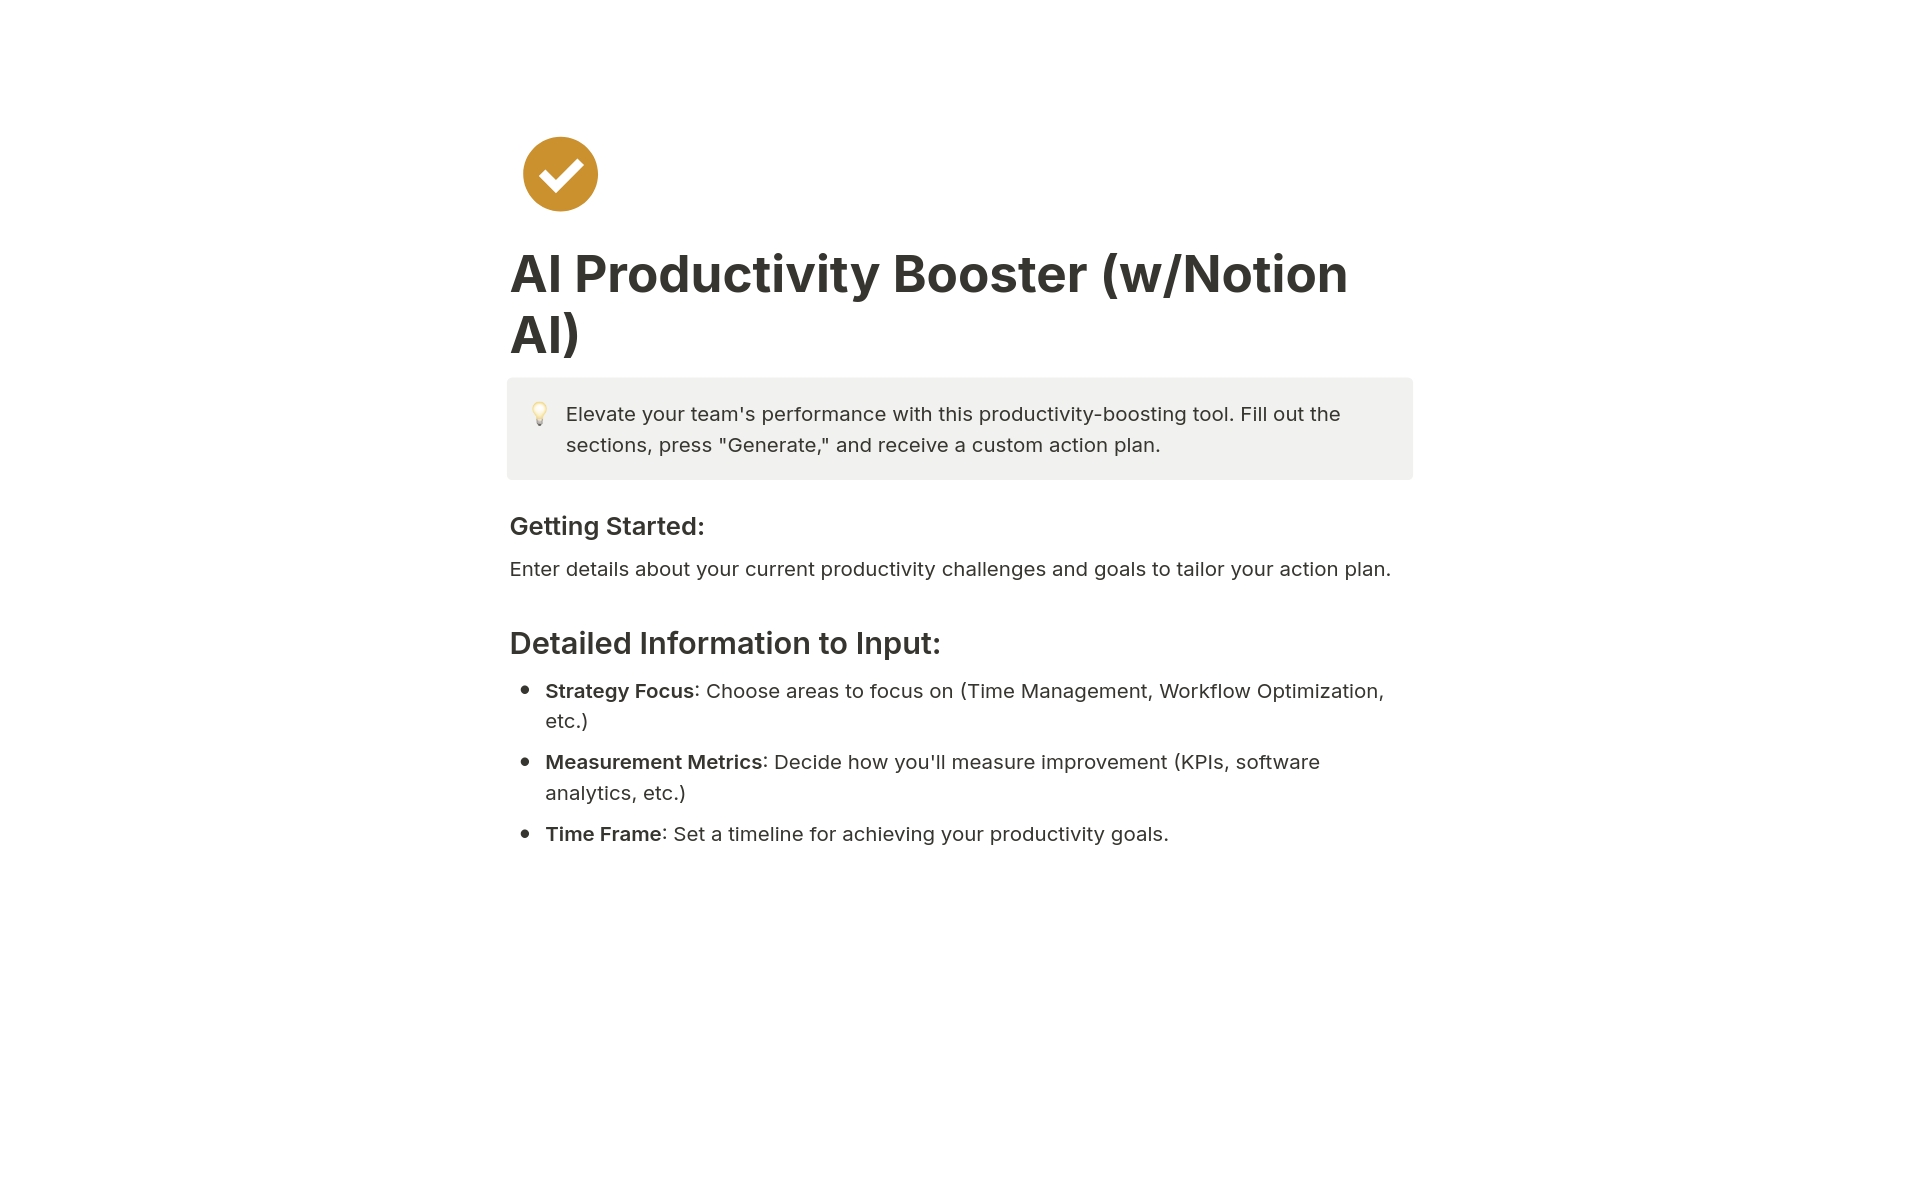 Vista previa de plantilla para AI Productivity Booster